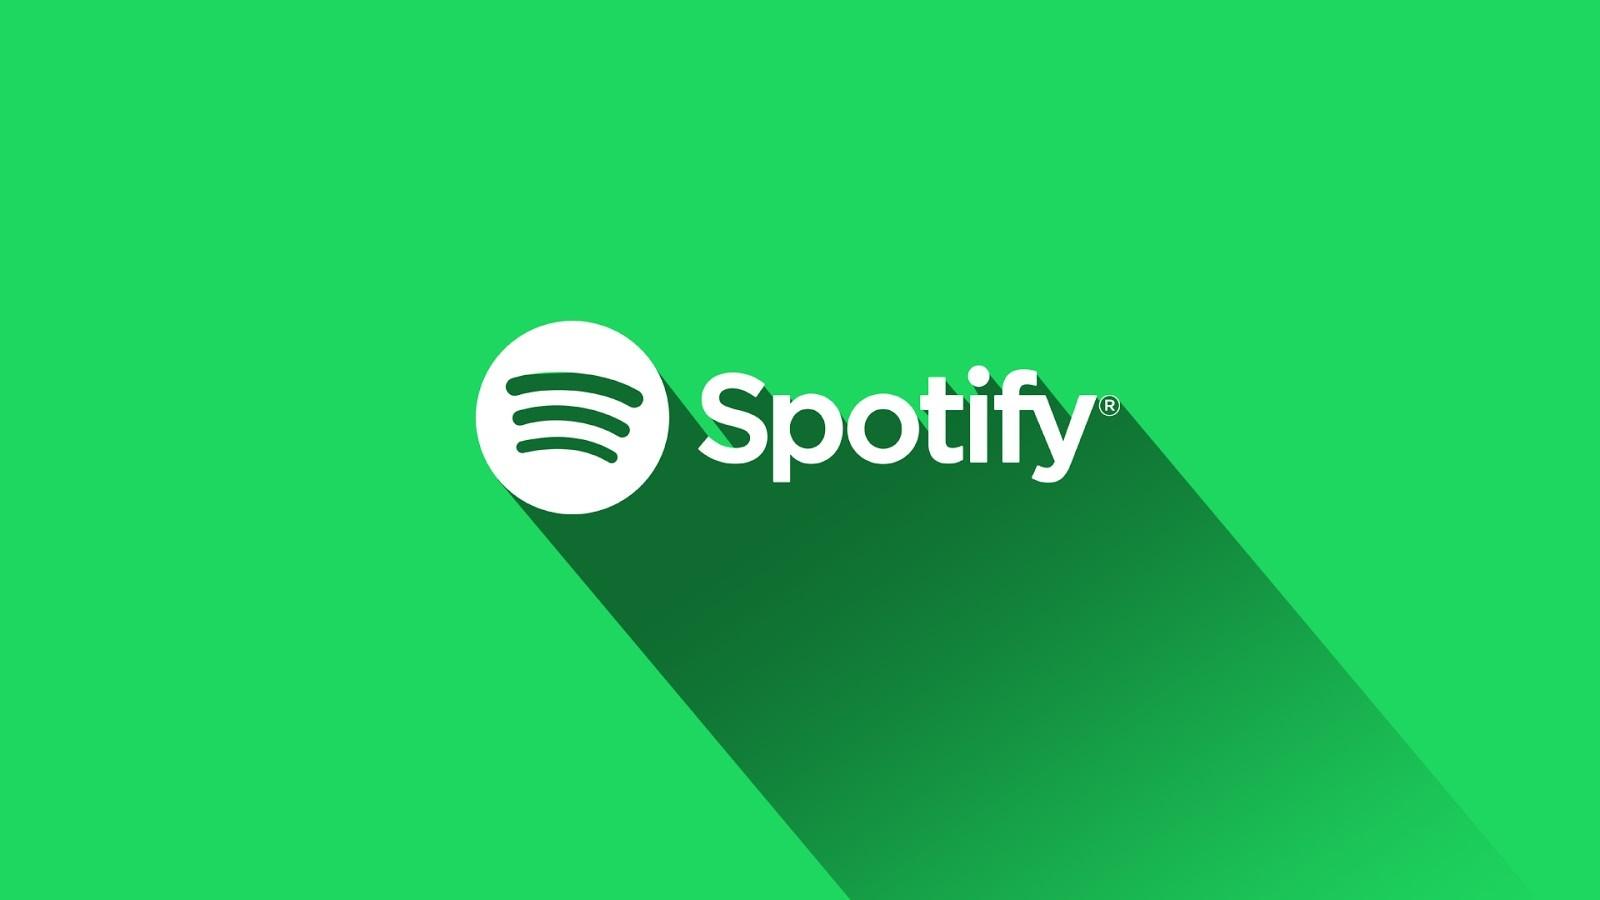 Spotify, musica, streaming